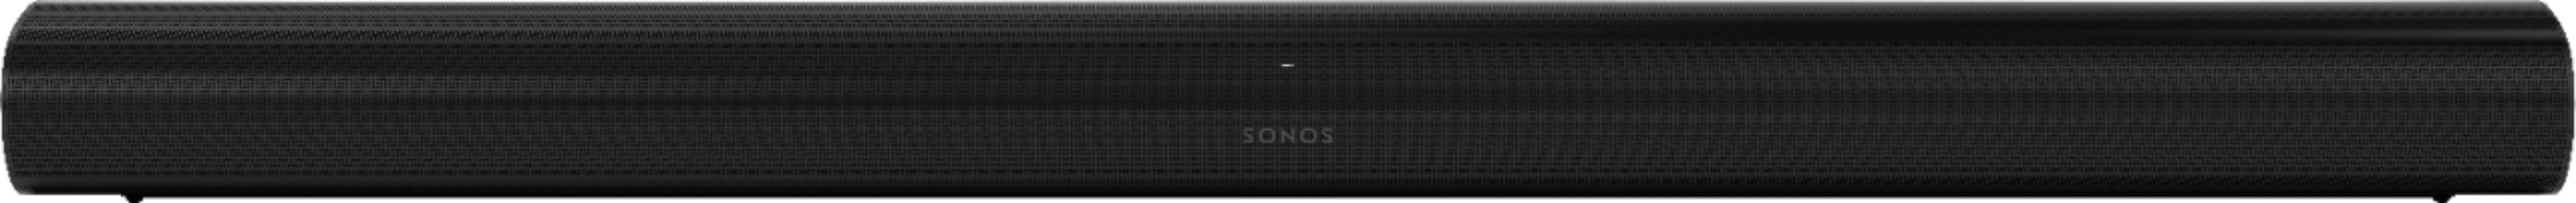 Sonos Arc Soundbar - DIGITALCINEMA